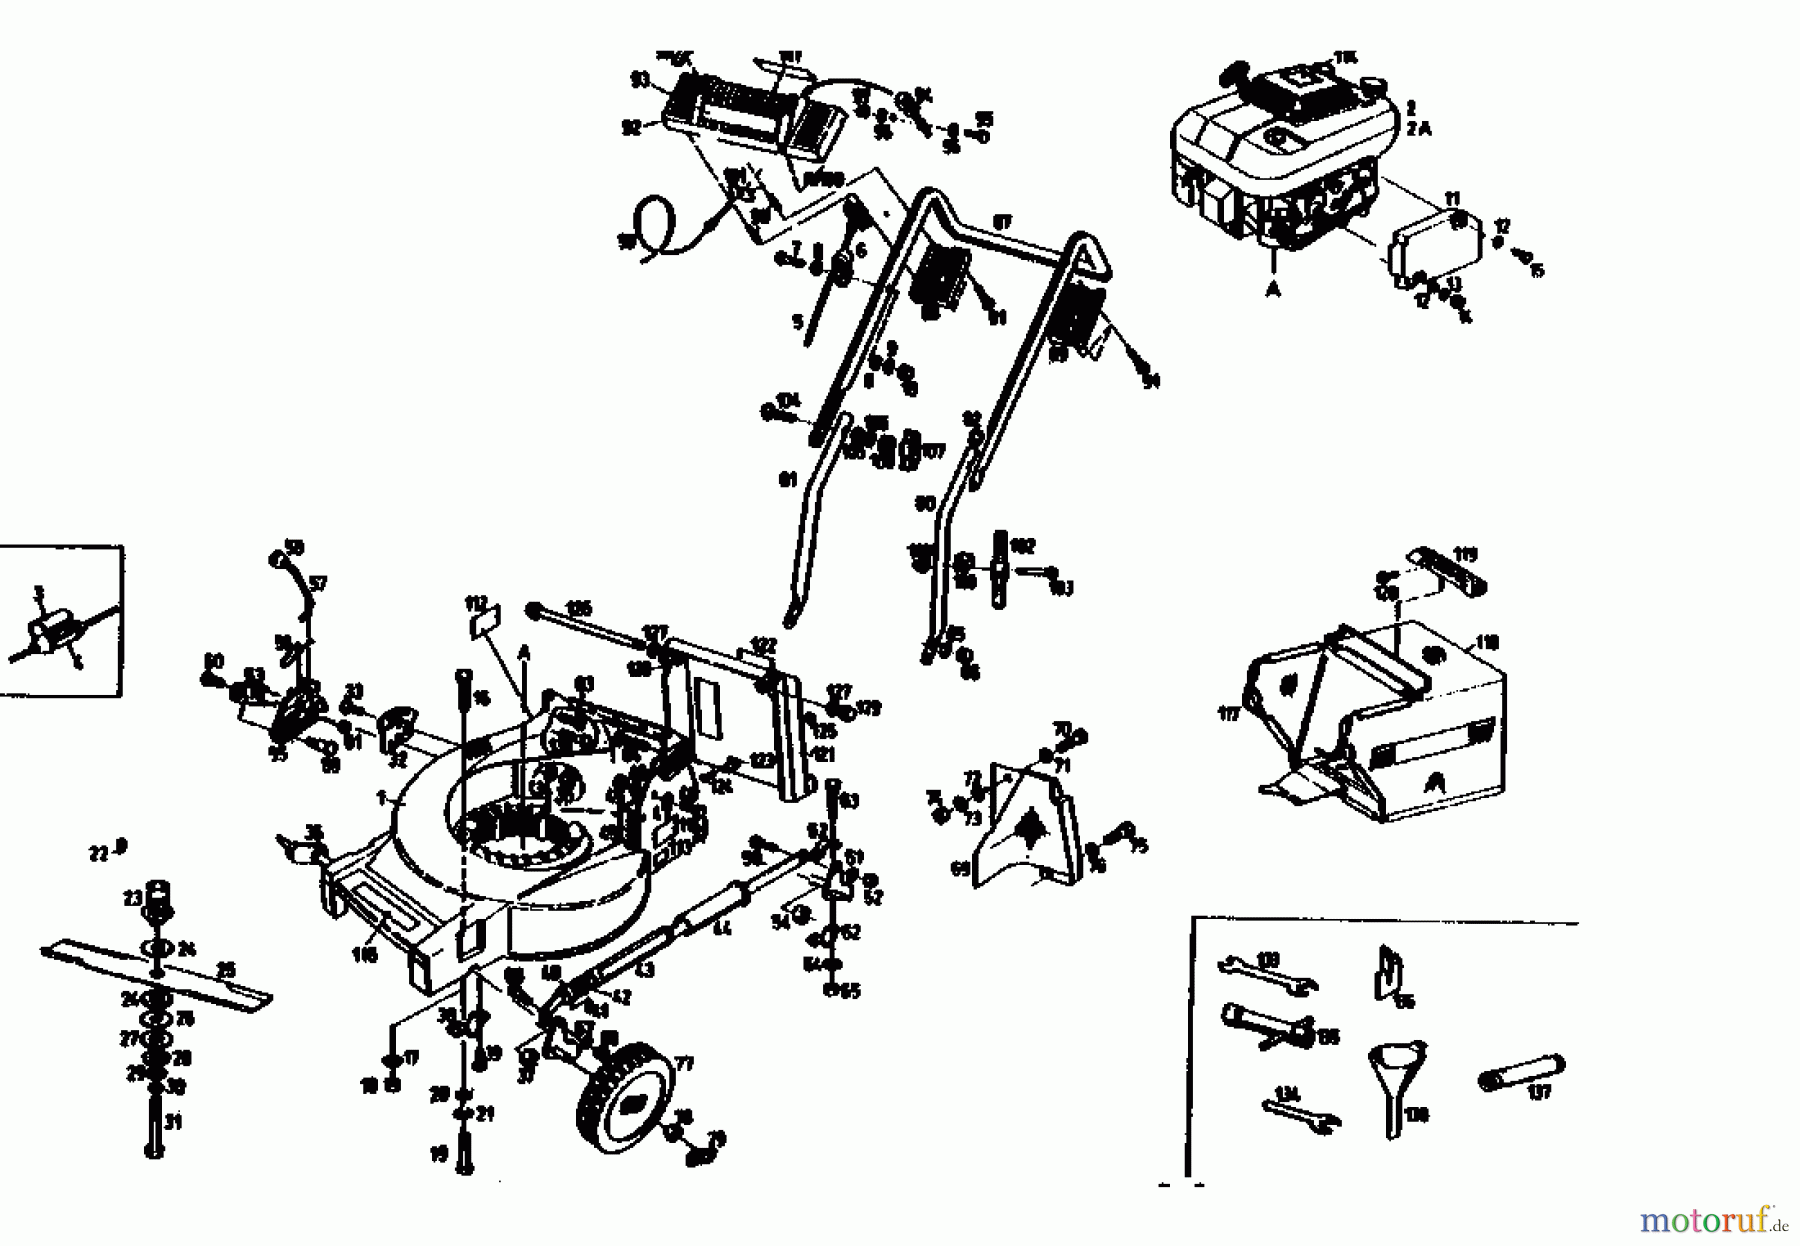  Gutbrod Petrol mower MH 532 04005.01  (1990) Basic machine